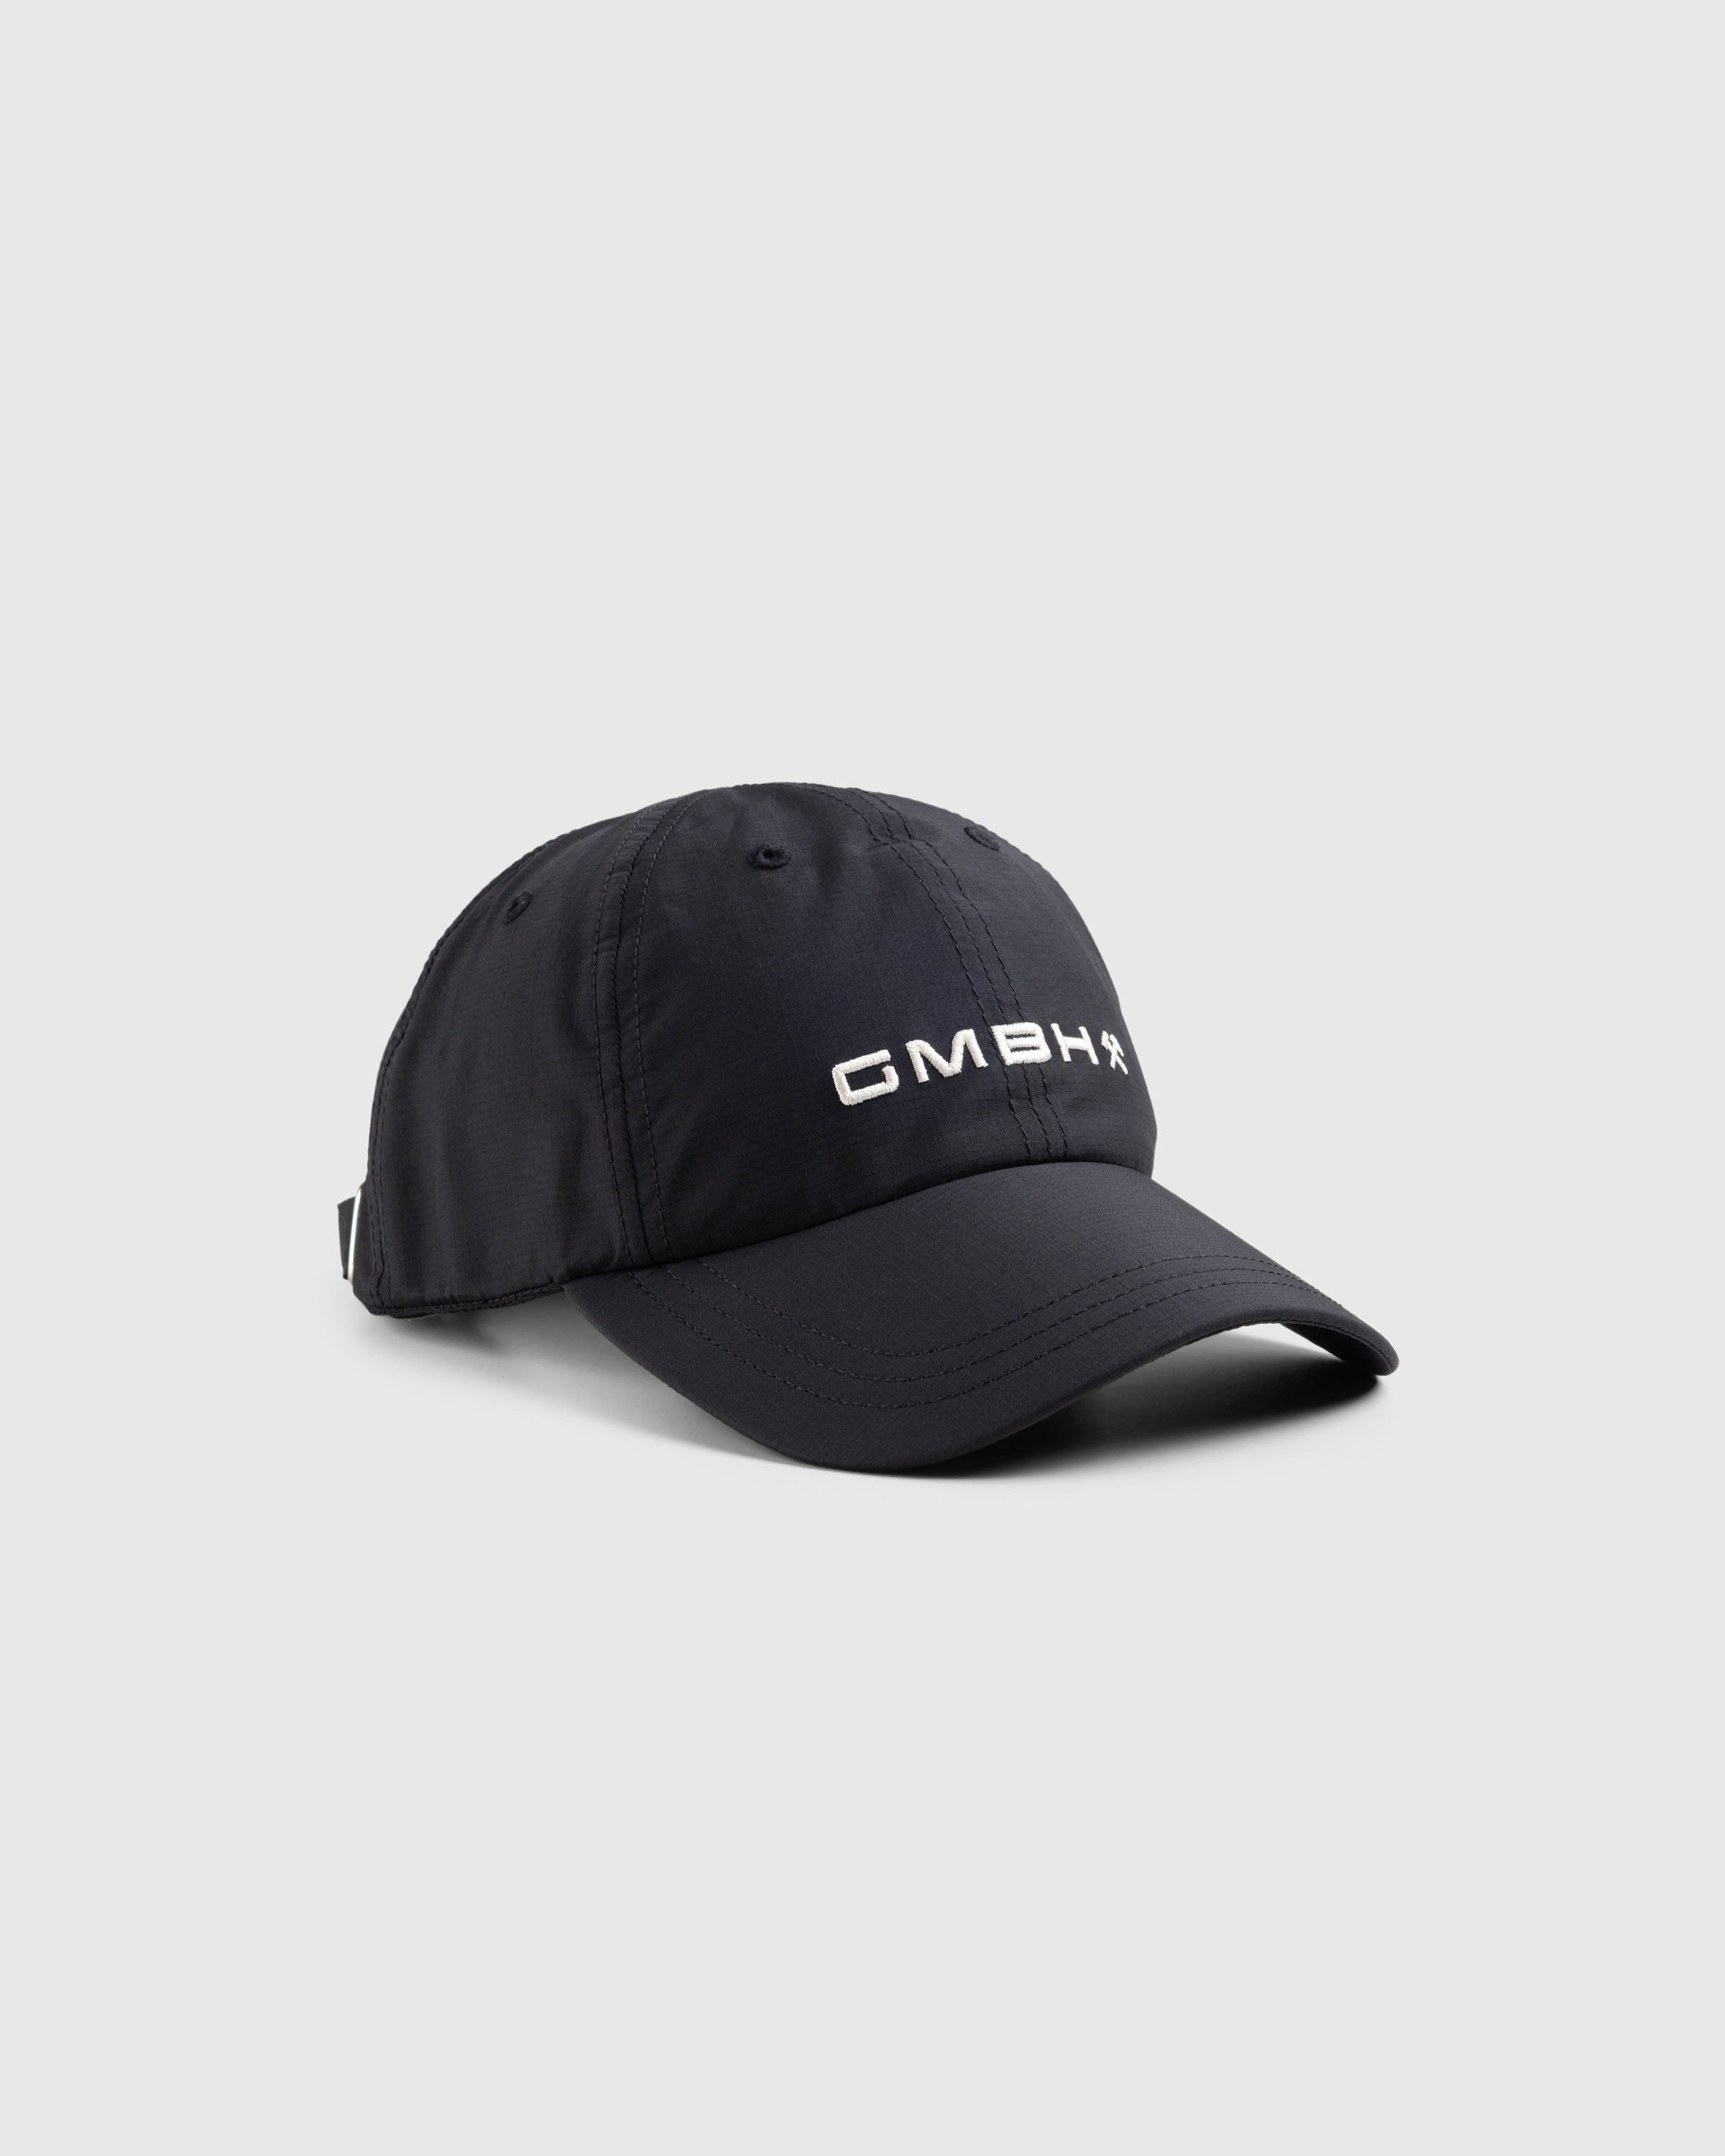 GmbH - Logo Embroidered Baseball Cap Black - Accessories - Black - Image 1